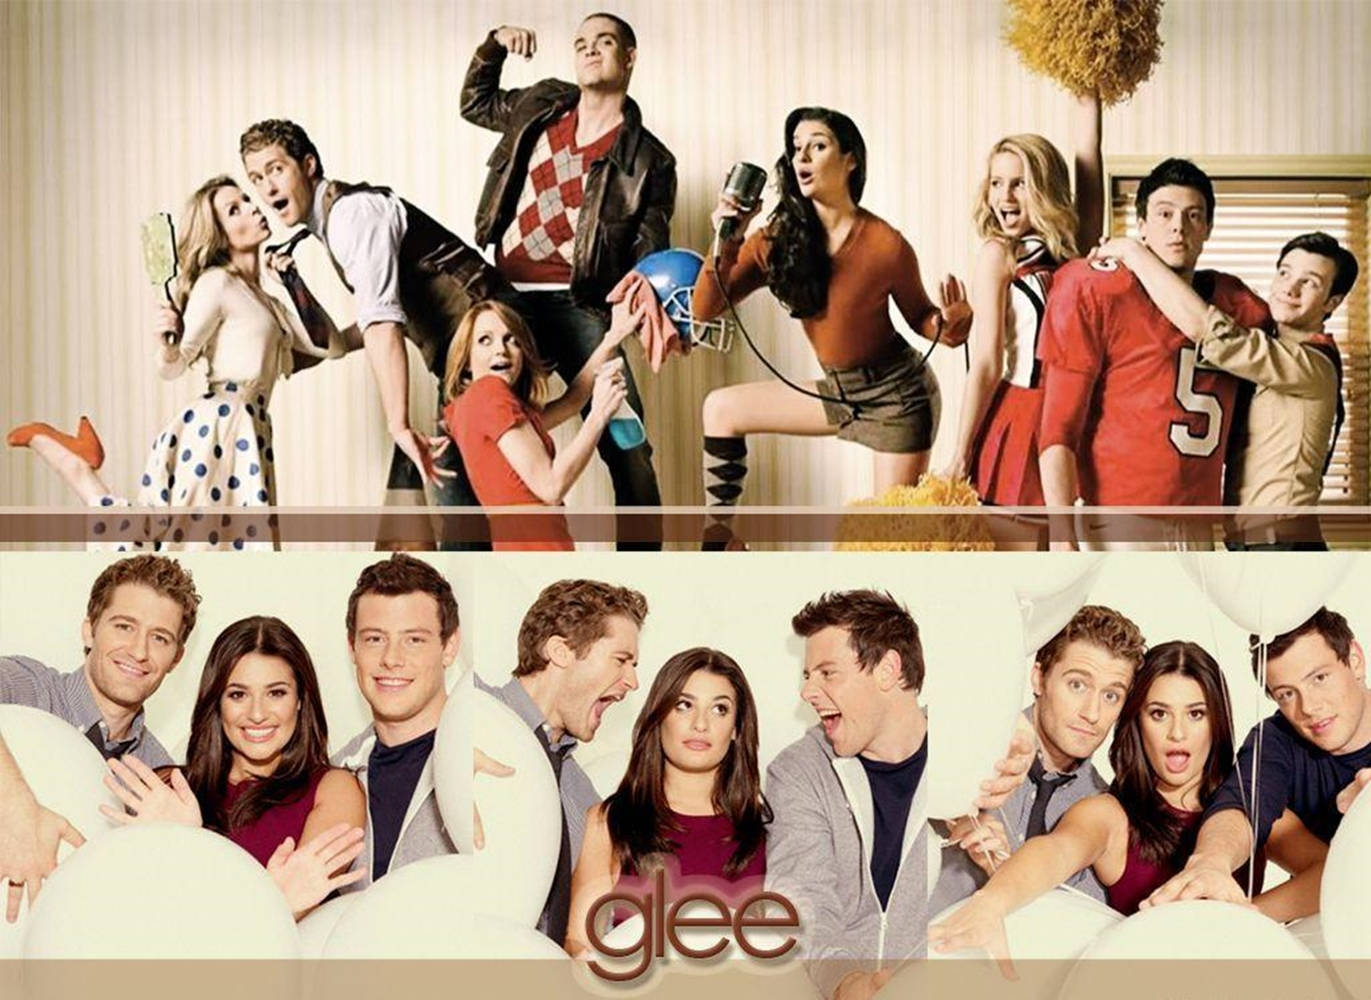 Glee Cast Members Poster Design Background